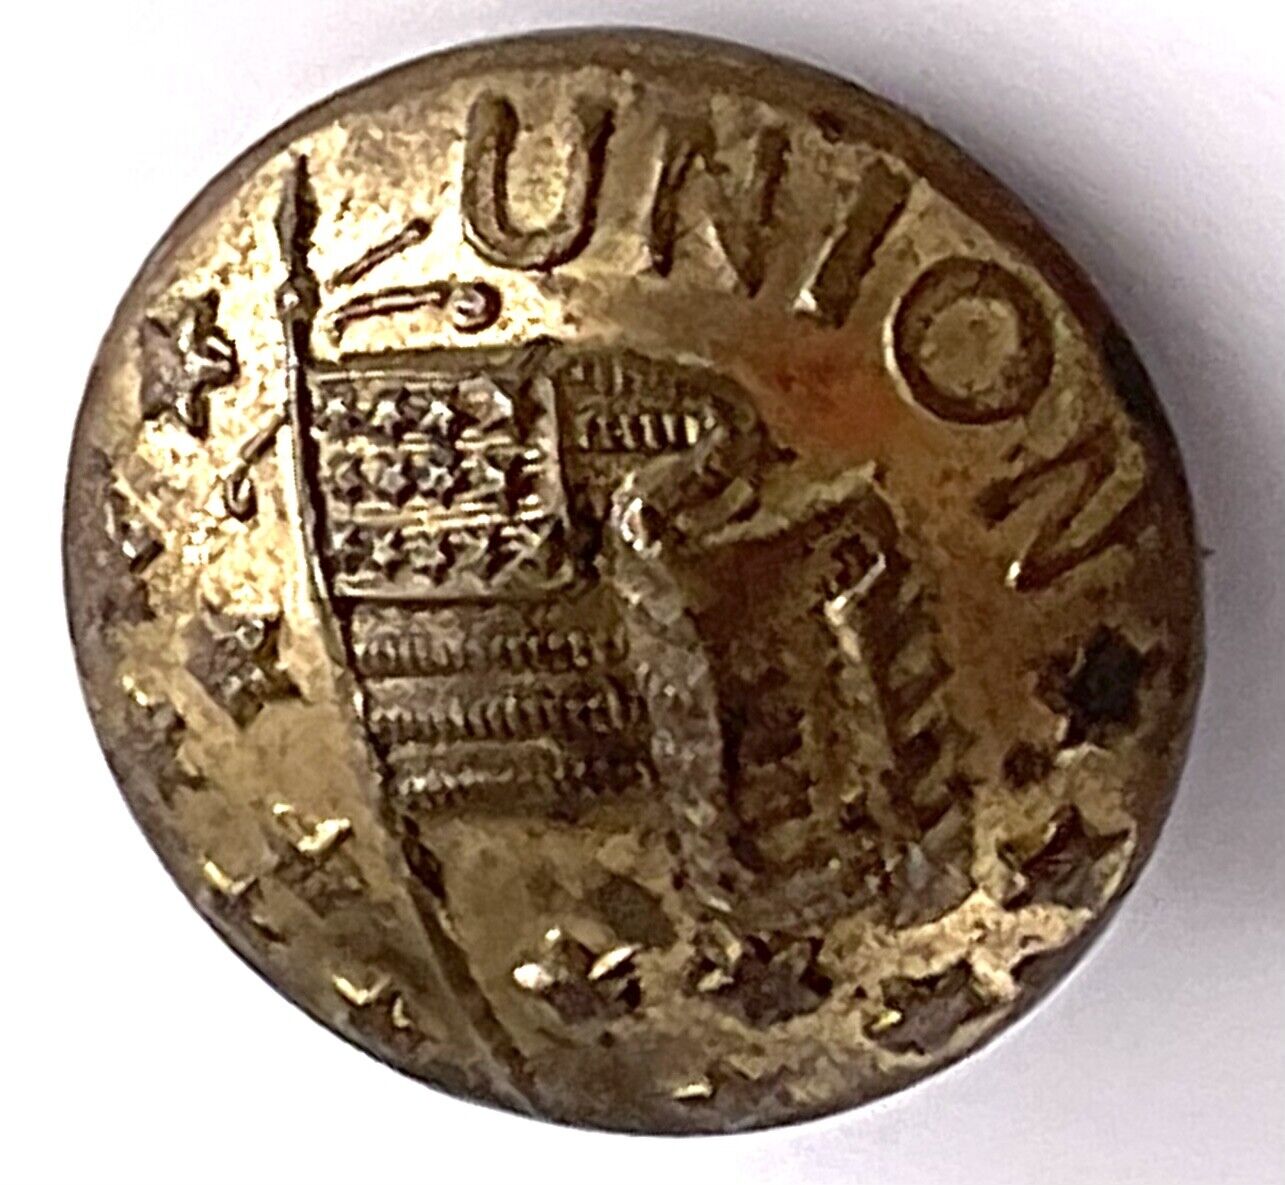 Antique Union US Flag Stars Small Old Gilt Metal Button Patriotic Political